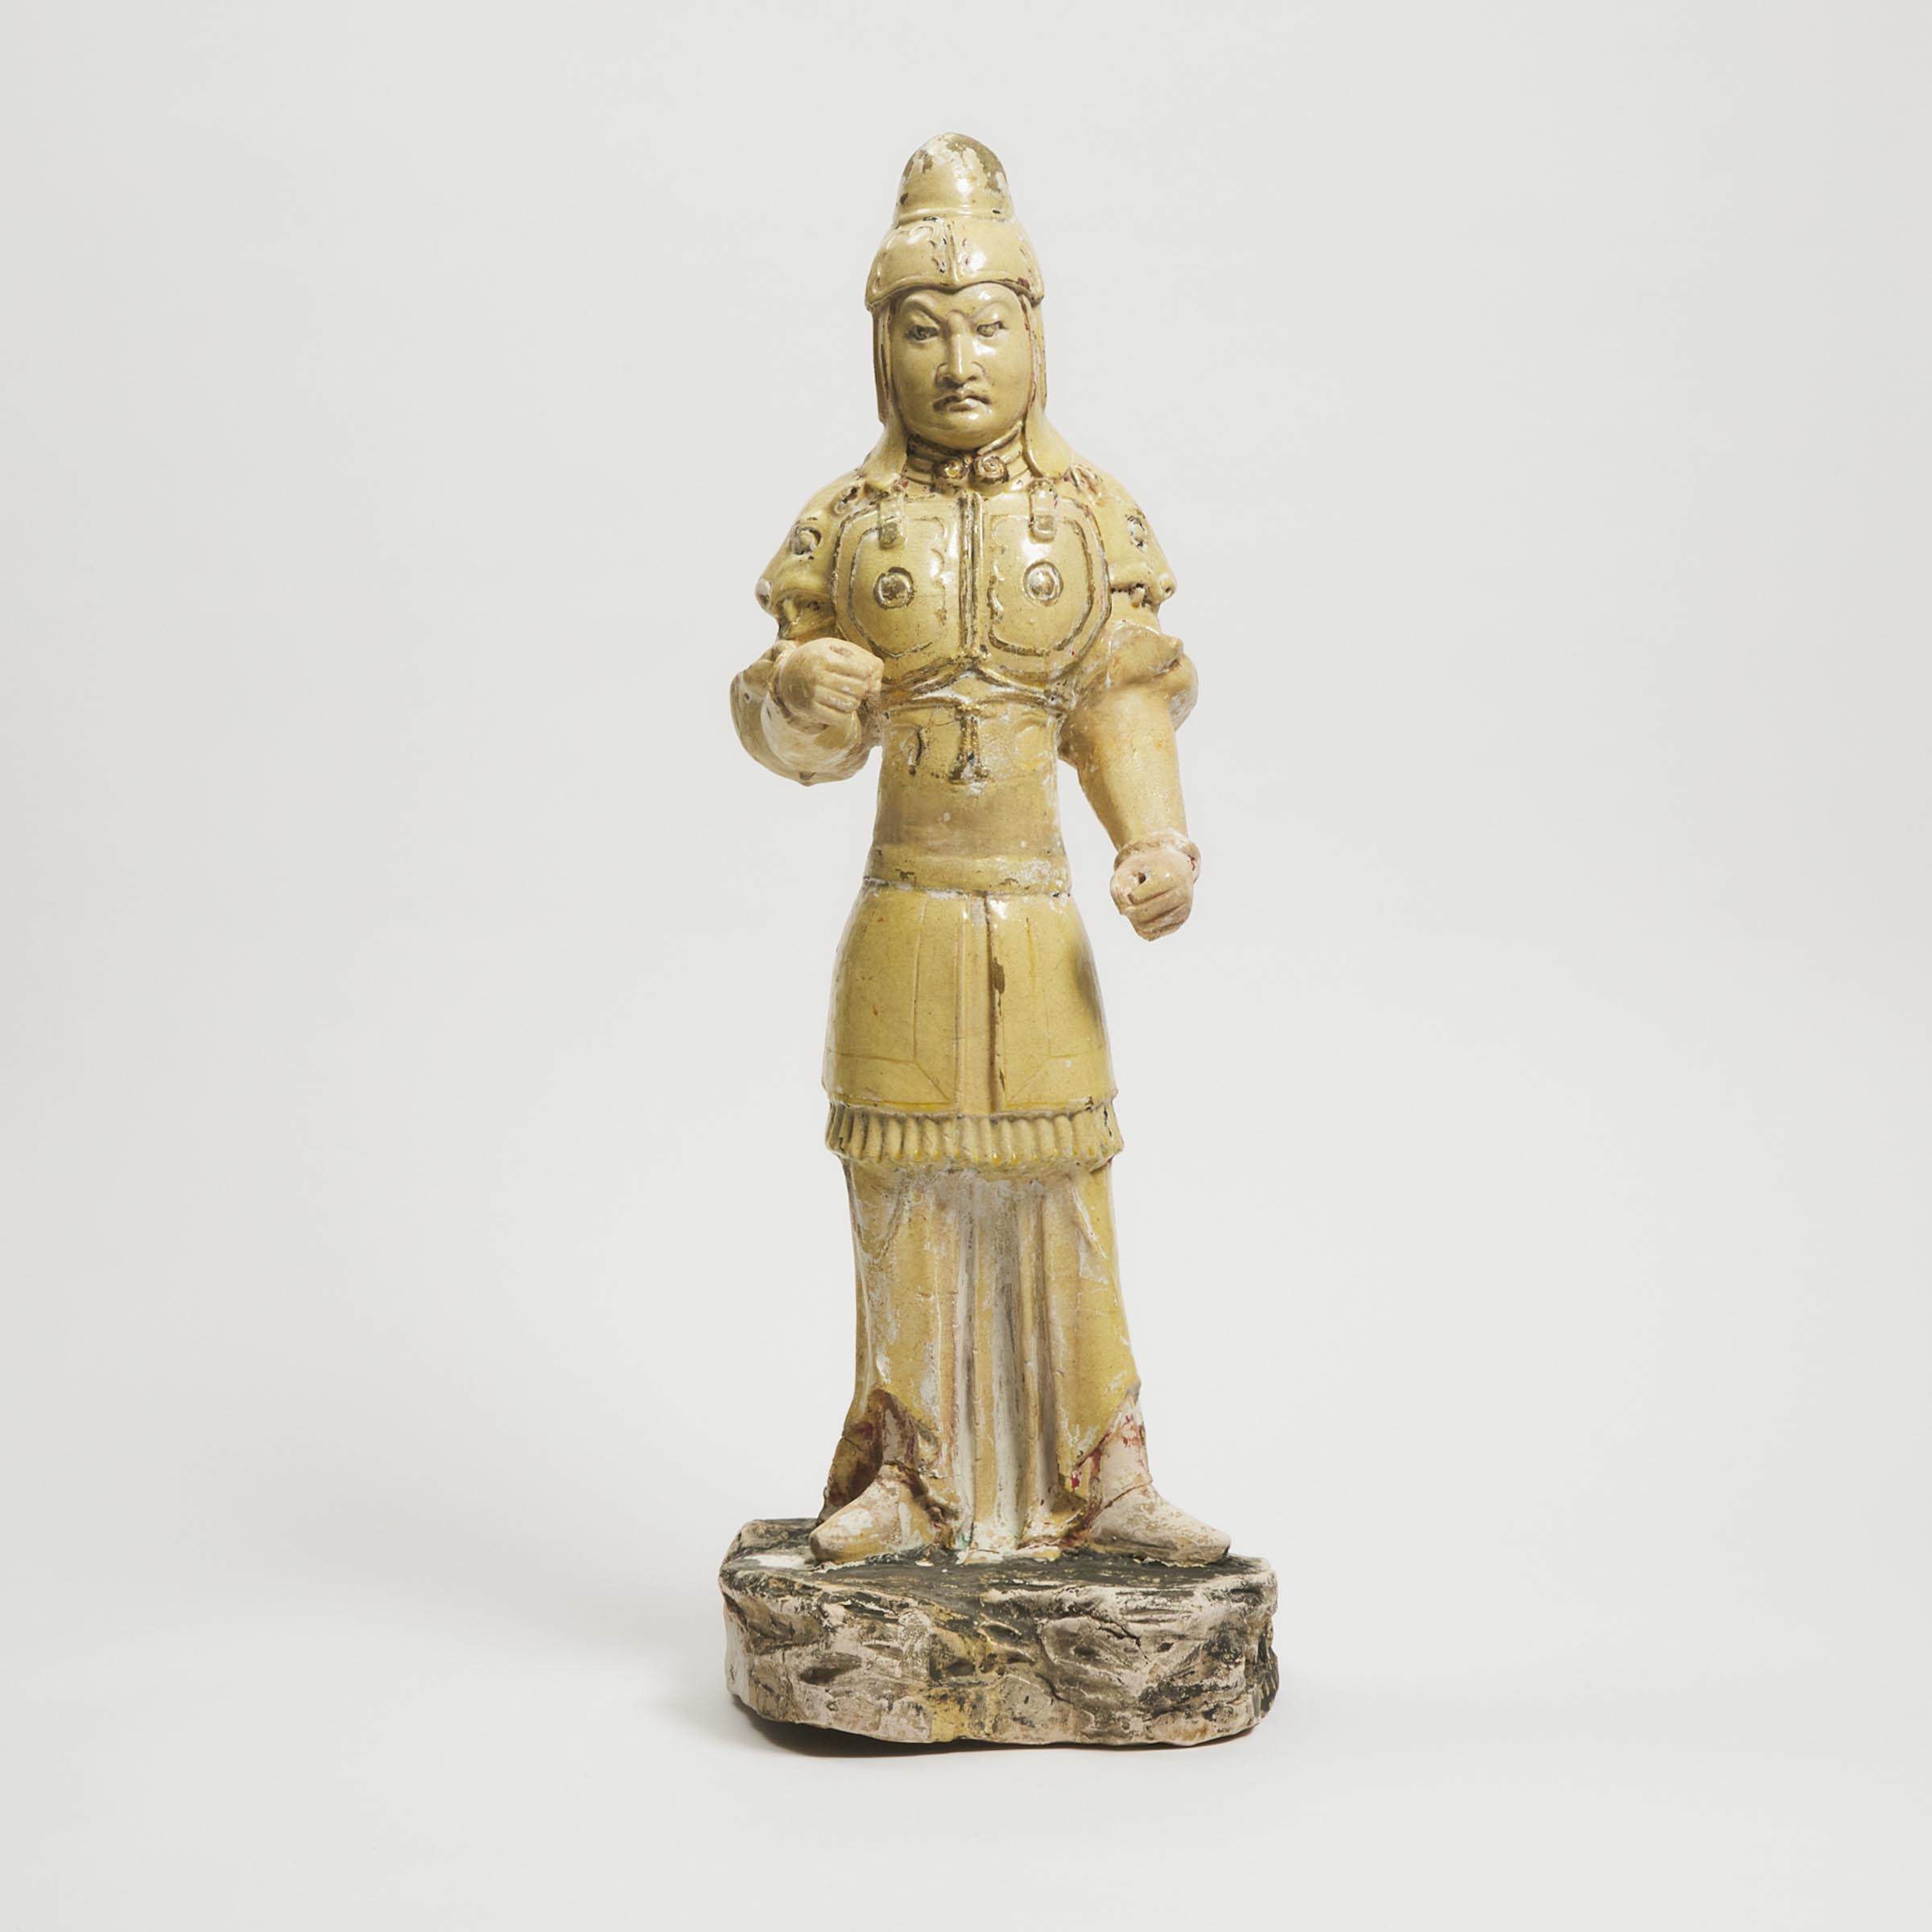 A Rare Partial Gilt Straw-Glazed Pottery Figure of a Warrior, Sui Dynasty (AD 581-618)